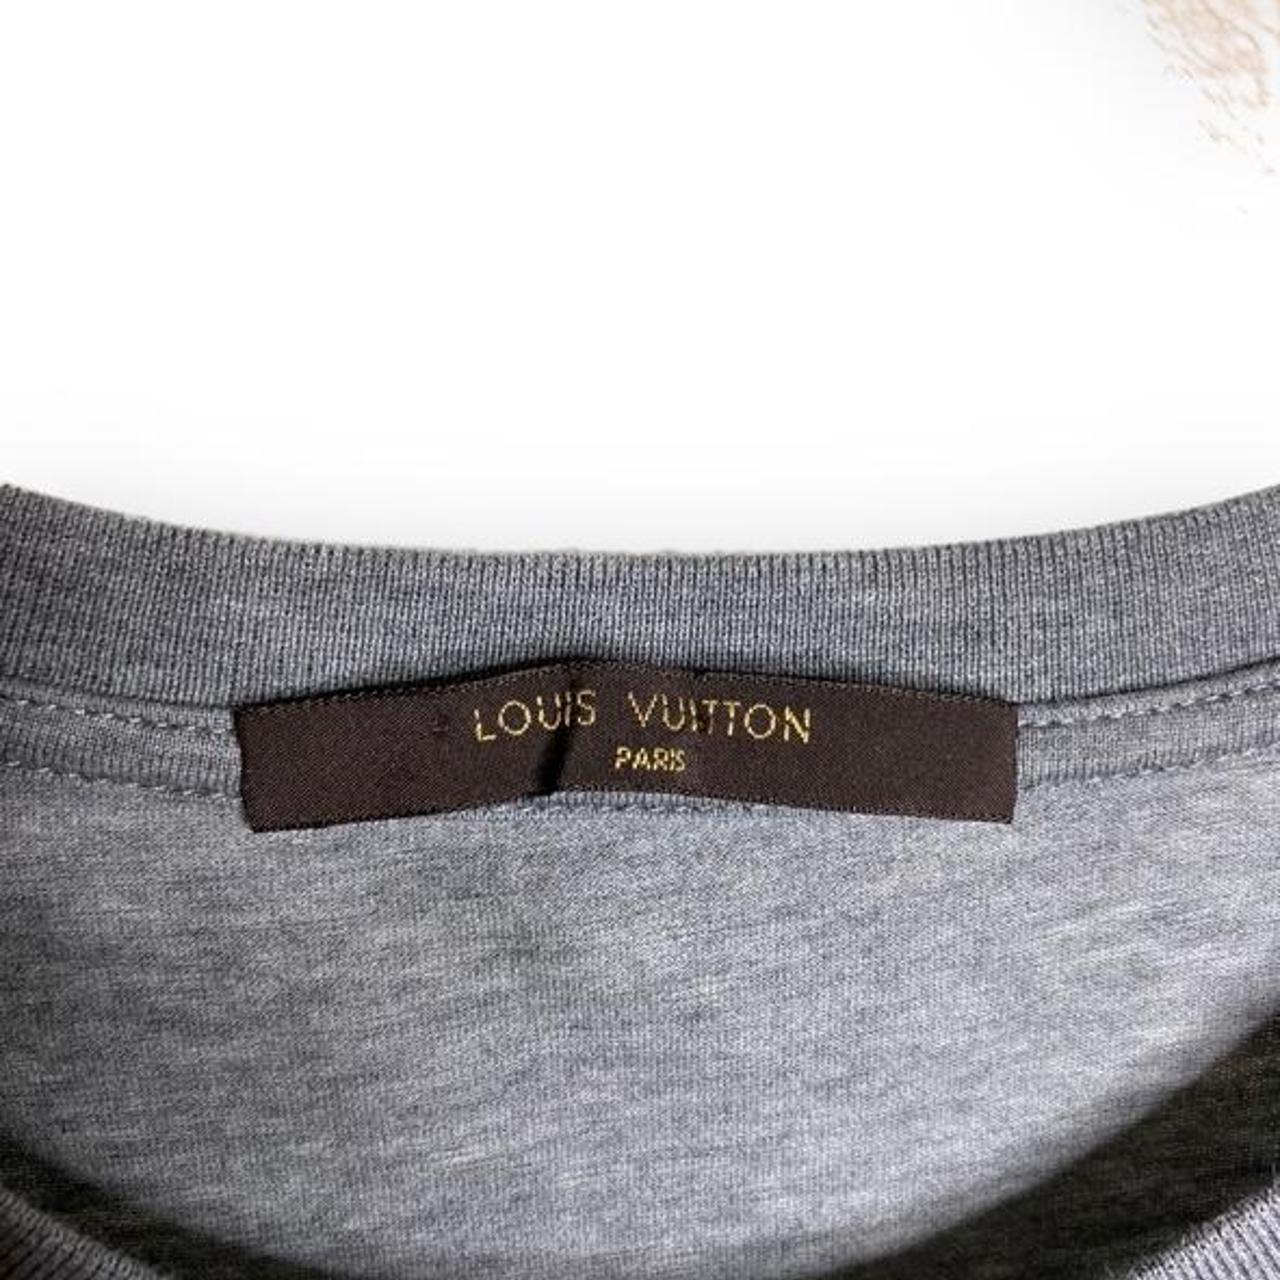 Louis Vuitton FW2013 Chapman Brothers Eyeball Shirt - Ākaibu Store